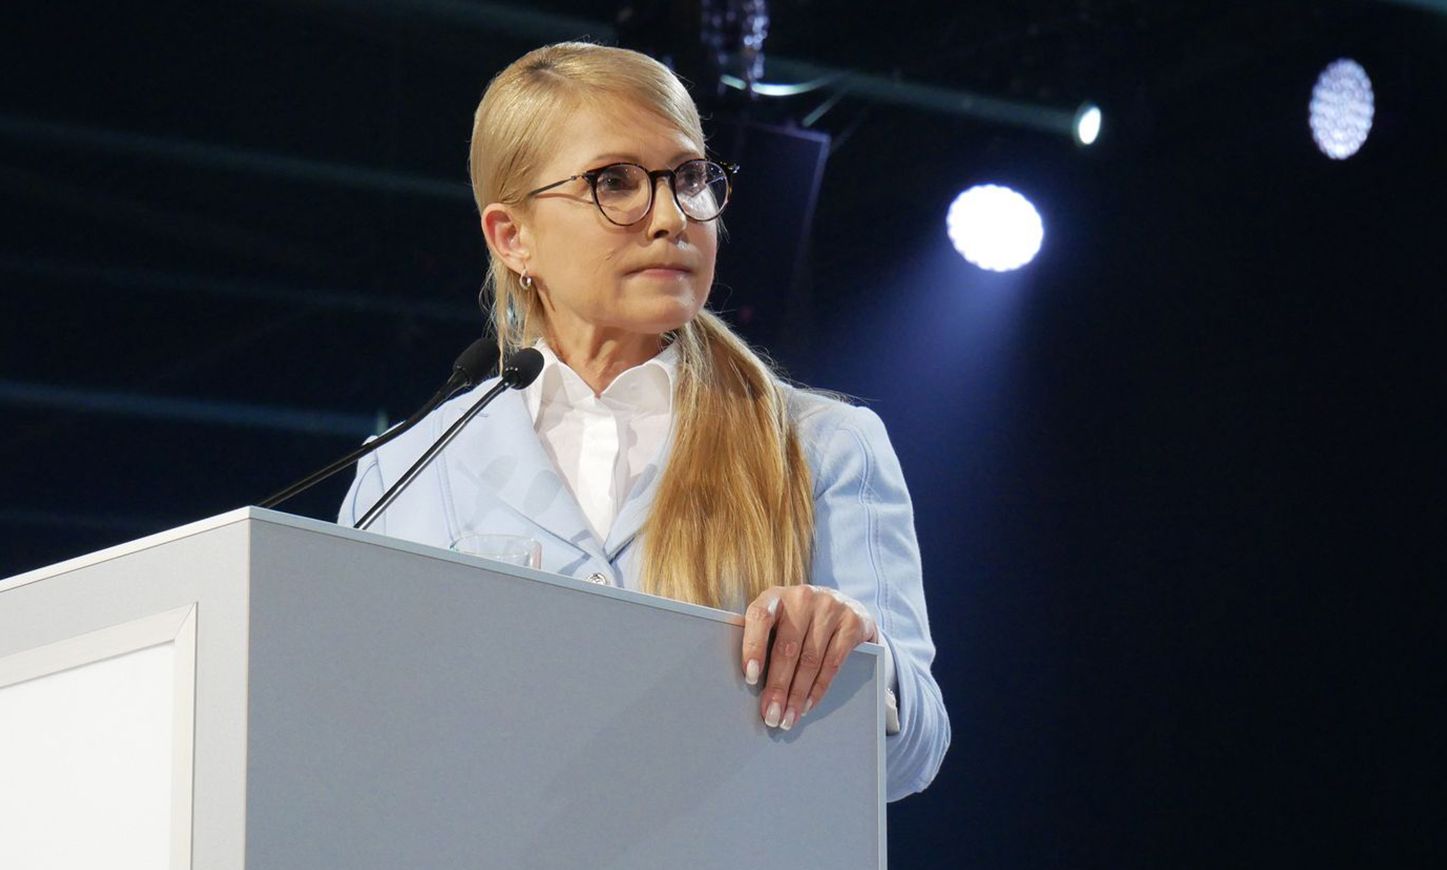 Тимошенко объявила о начале импичмента Порошенко